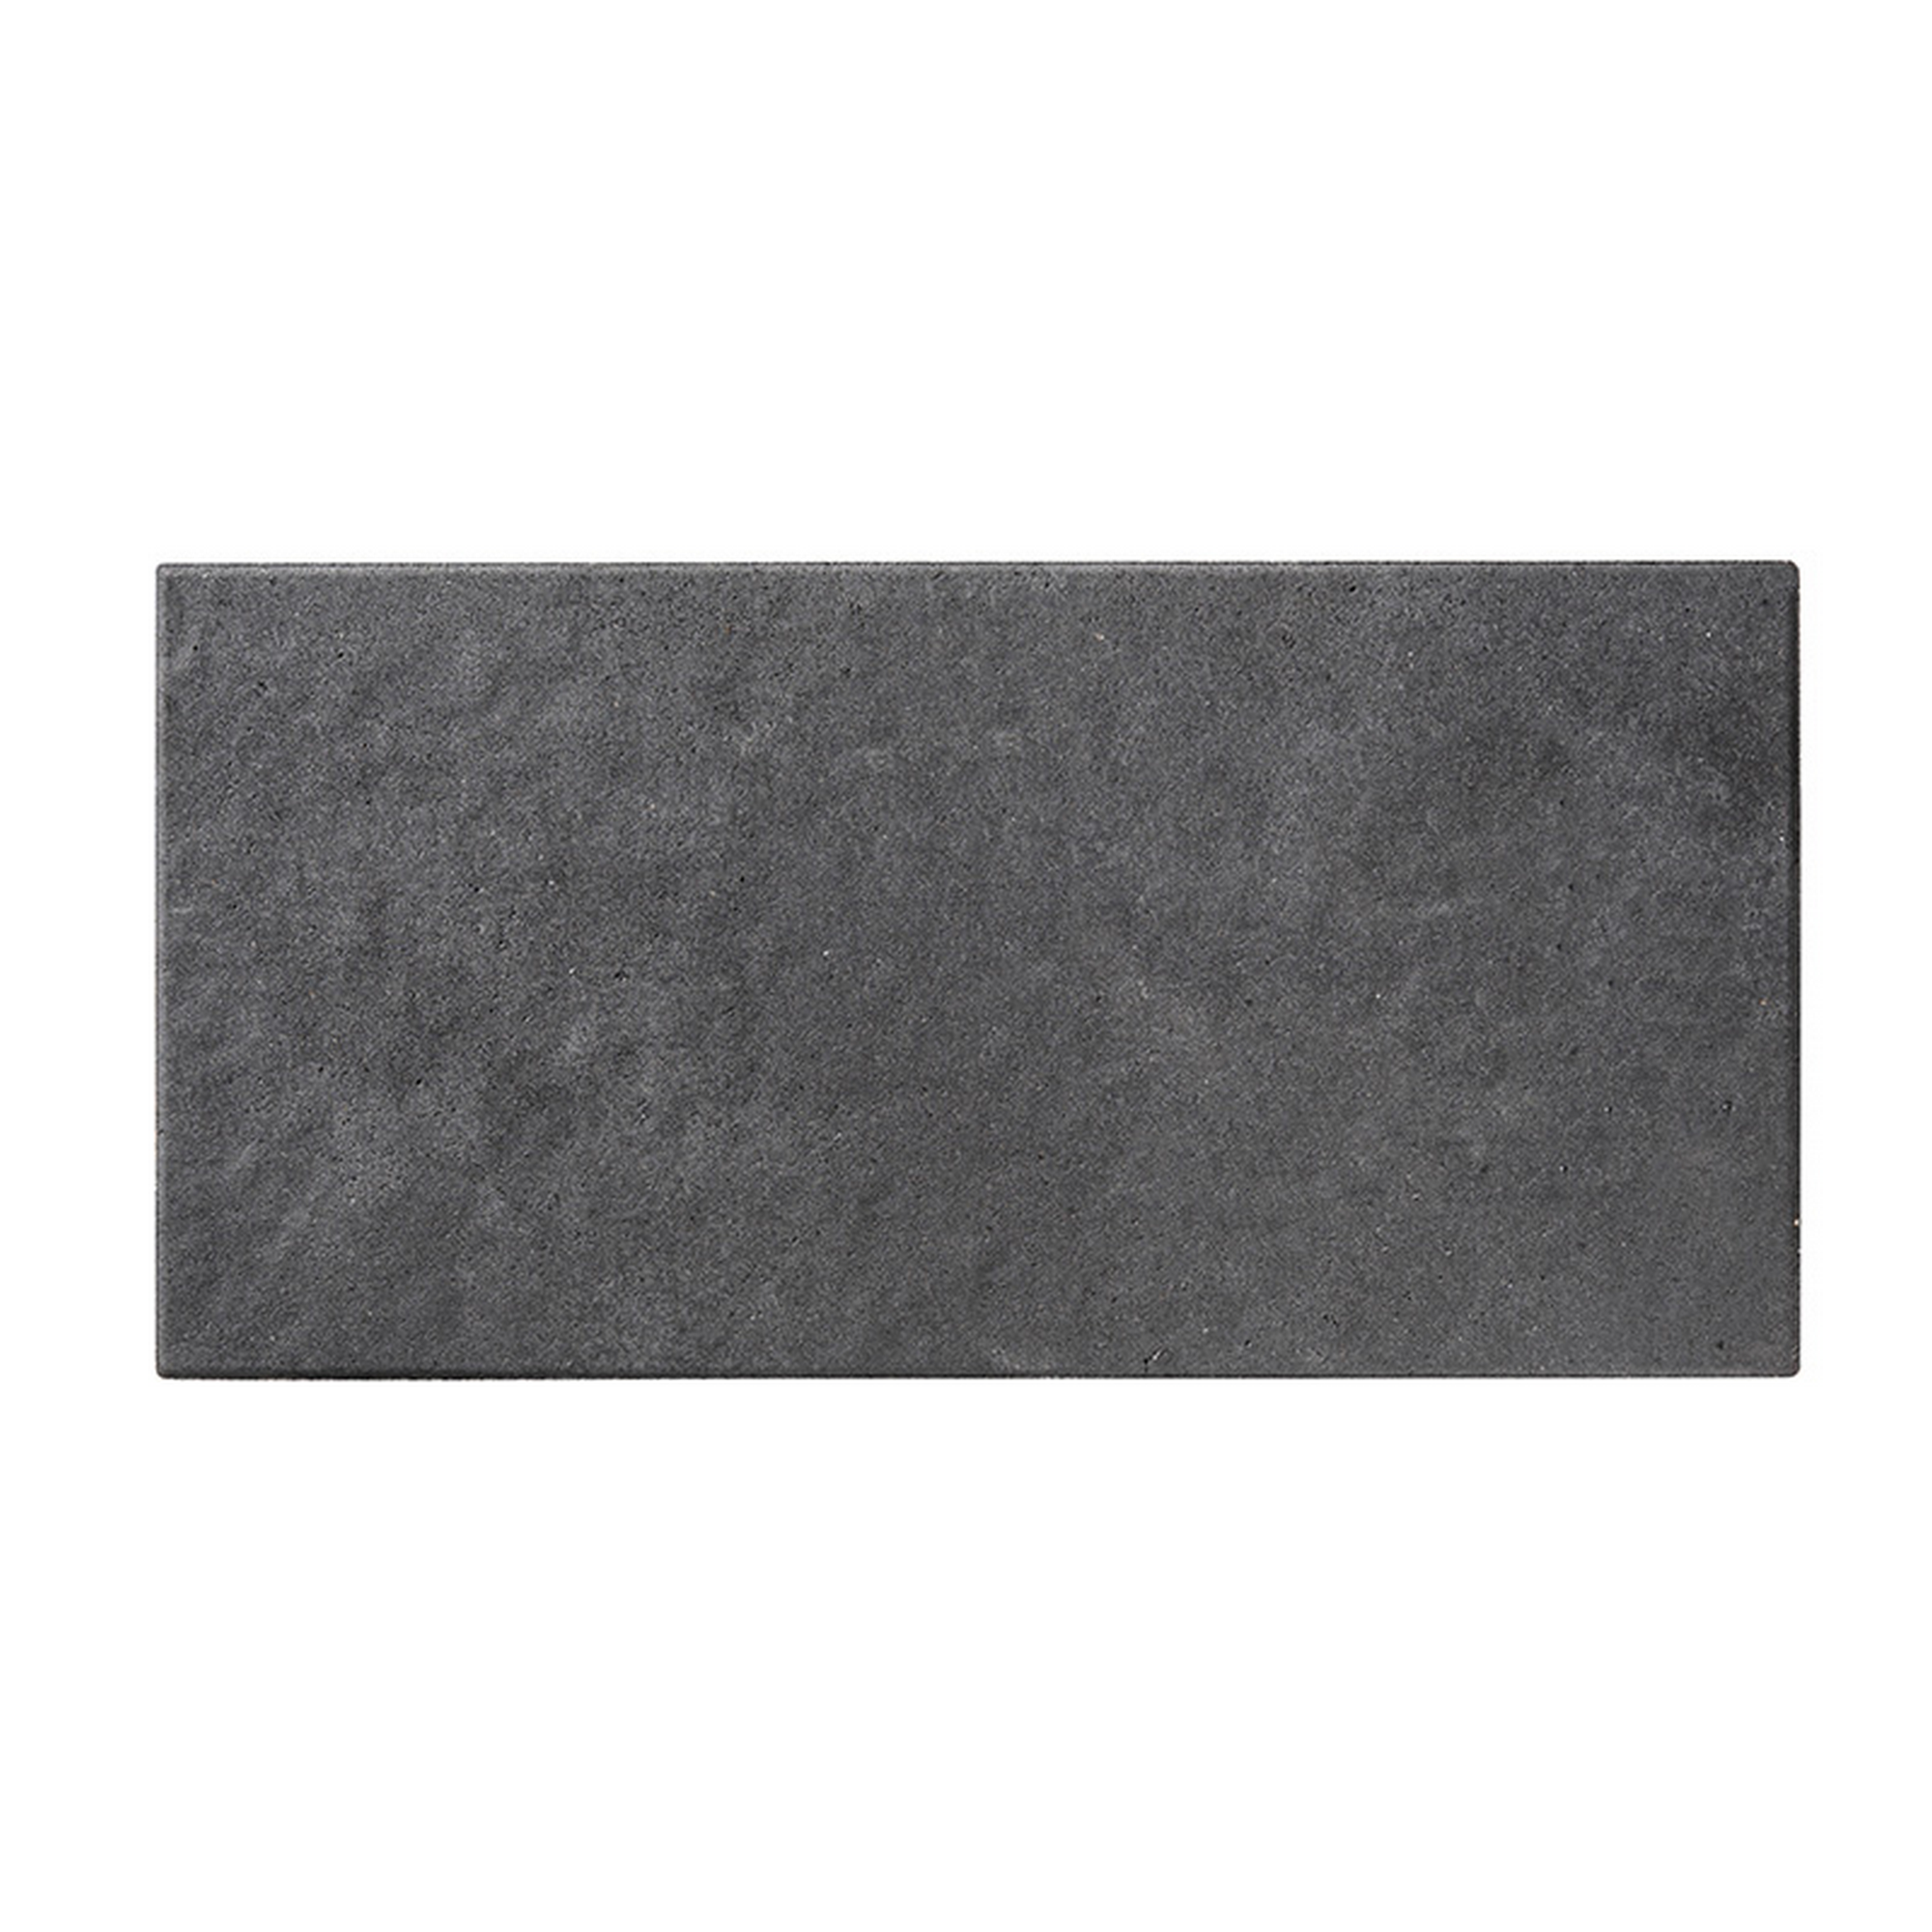 Terrassenplatte 'T-Court Grade' Beton basaltgrau 60 x 30 x 4 cm + product picture